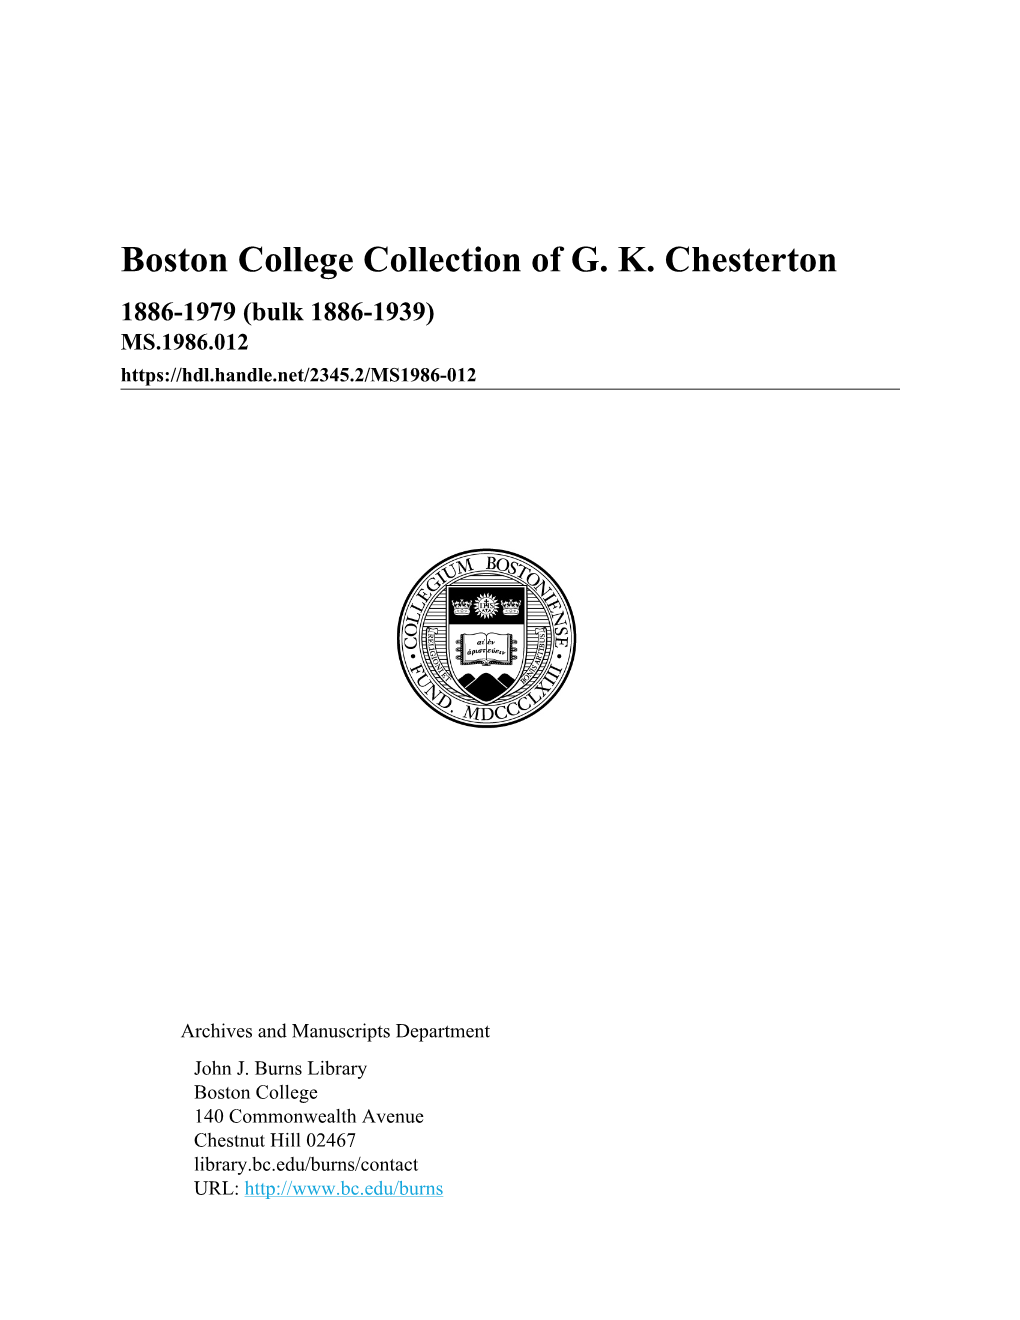 Boston College Collection of G. K. Chesterton 1886-1979 (Bulk 1886-1939) MS.1986.012